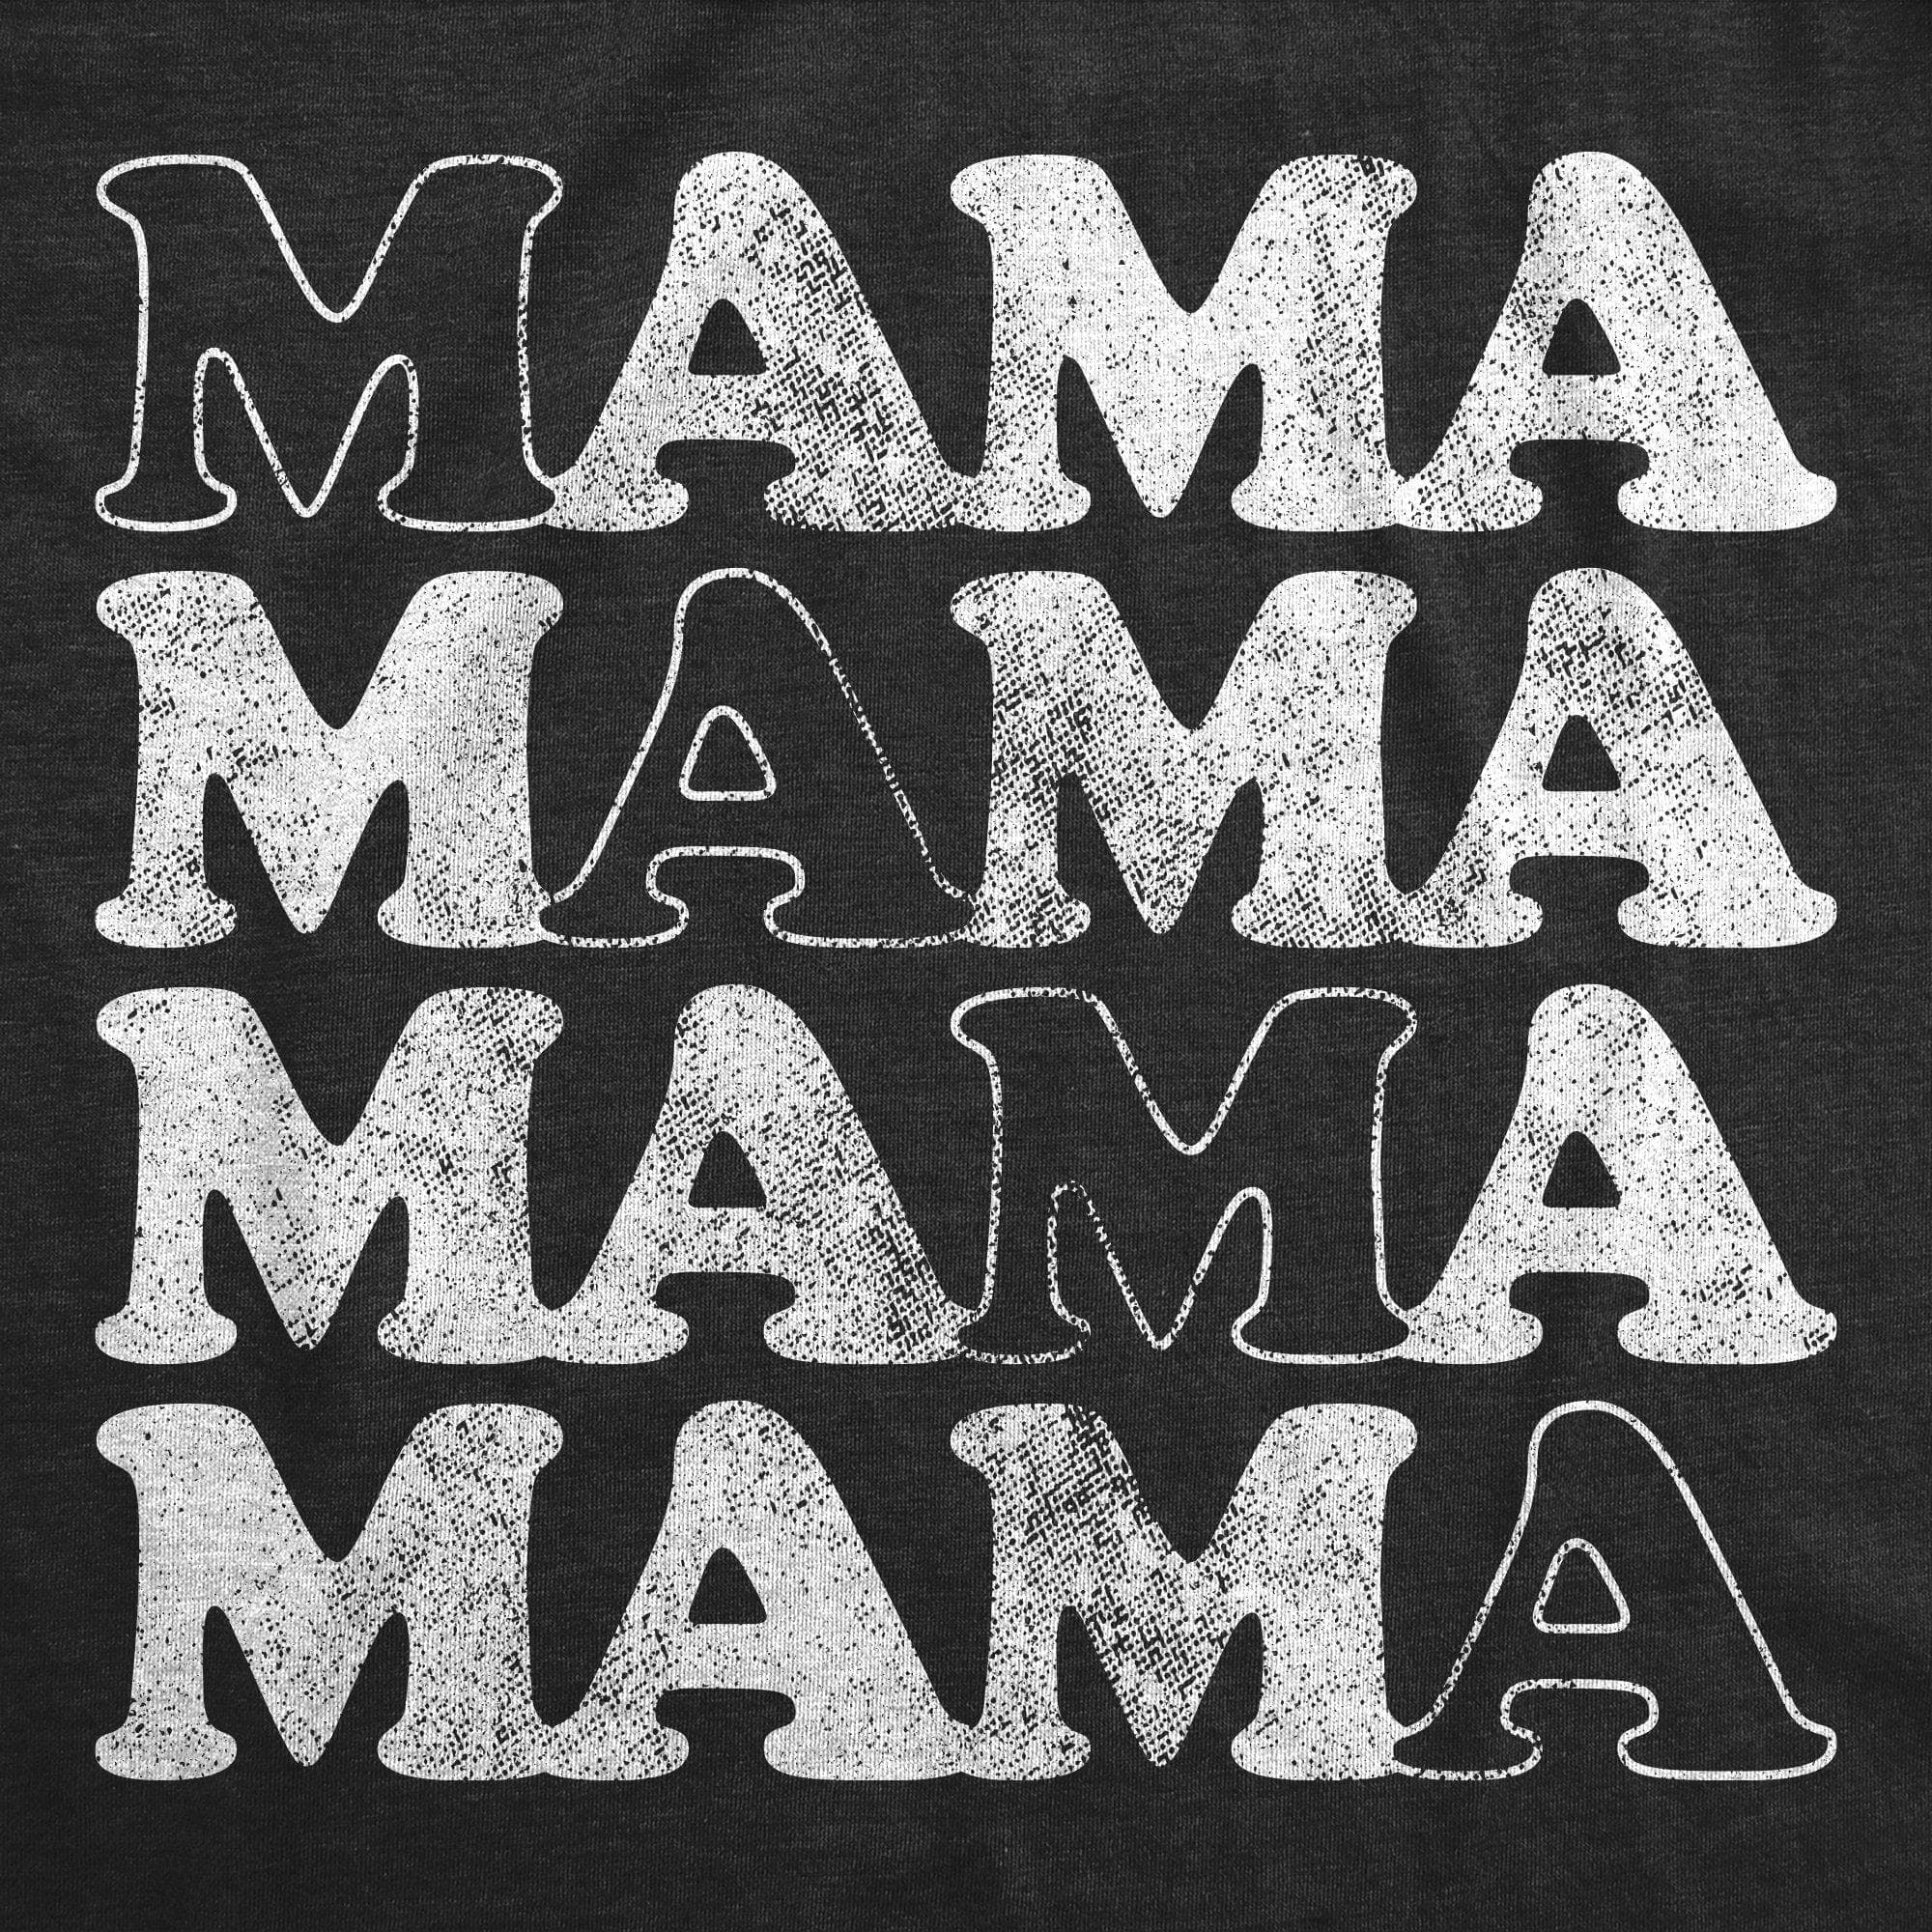 Mama Women's Tshirt - Crazy Dog T-Shirts